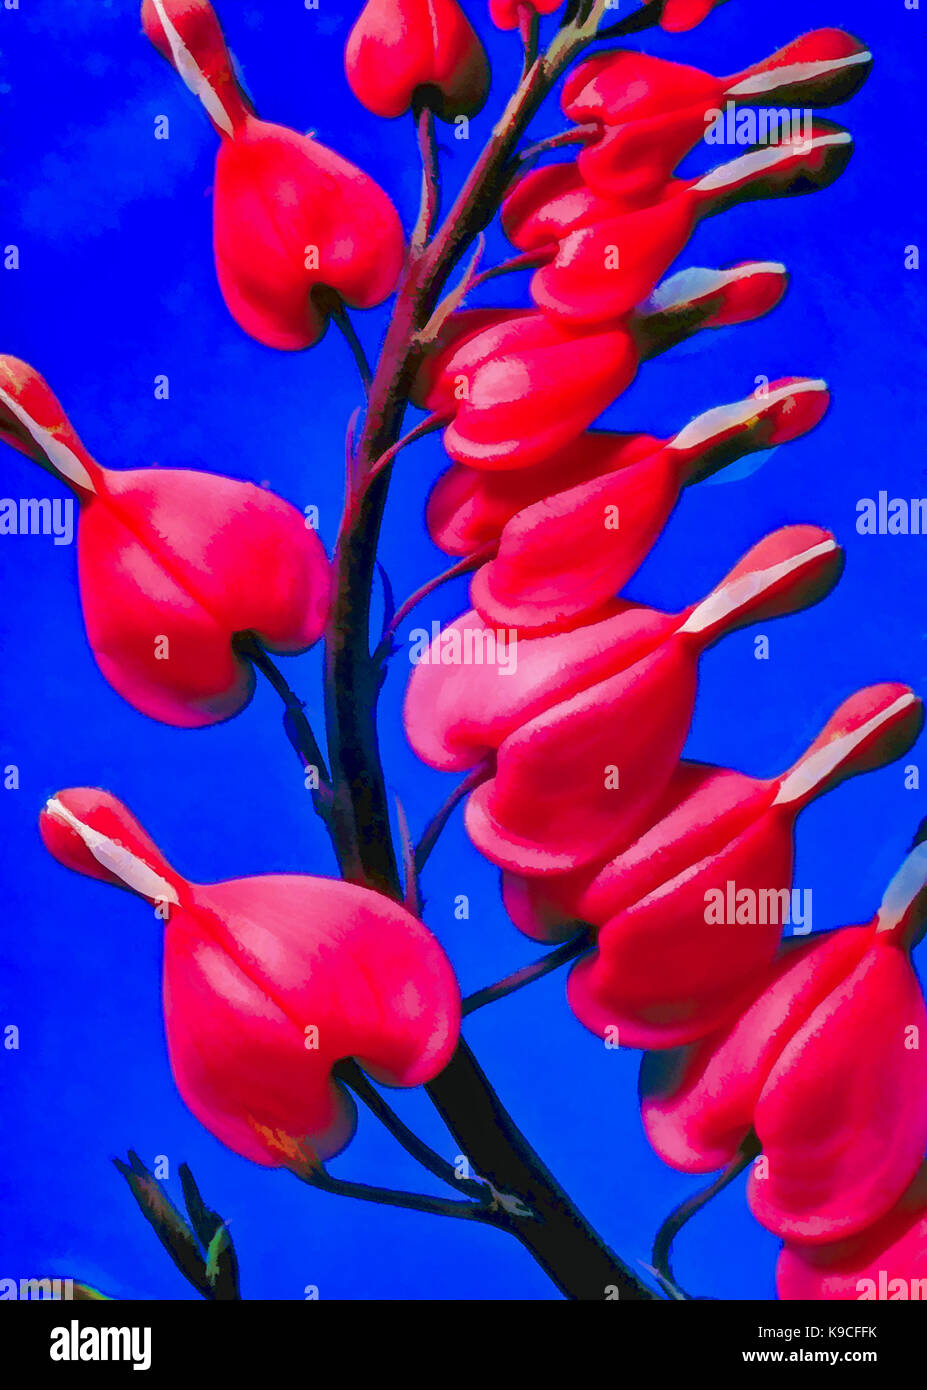 Rojo corazón sangrando flor florece, Lamprocapnos spectabilis (antiguo nombre Dicentra spectabilis) aislados en azul con gotas de agua. Foto manipulada i Foto de stock